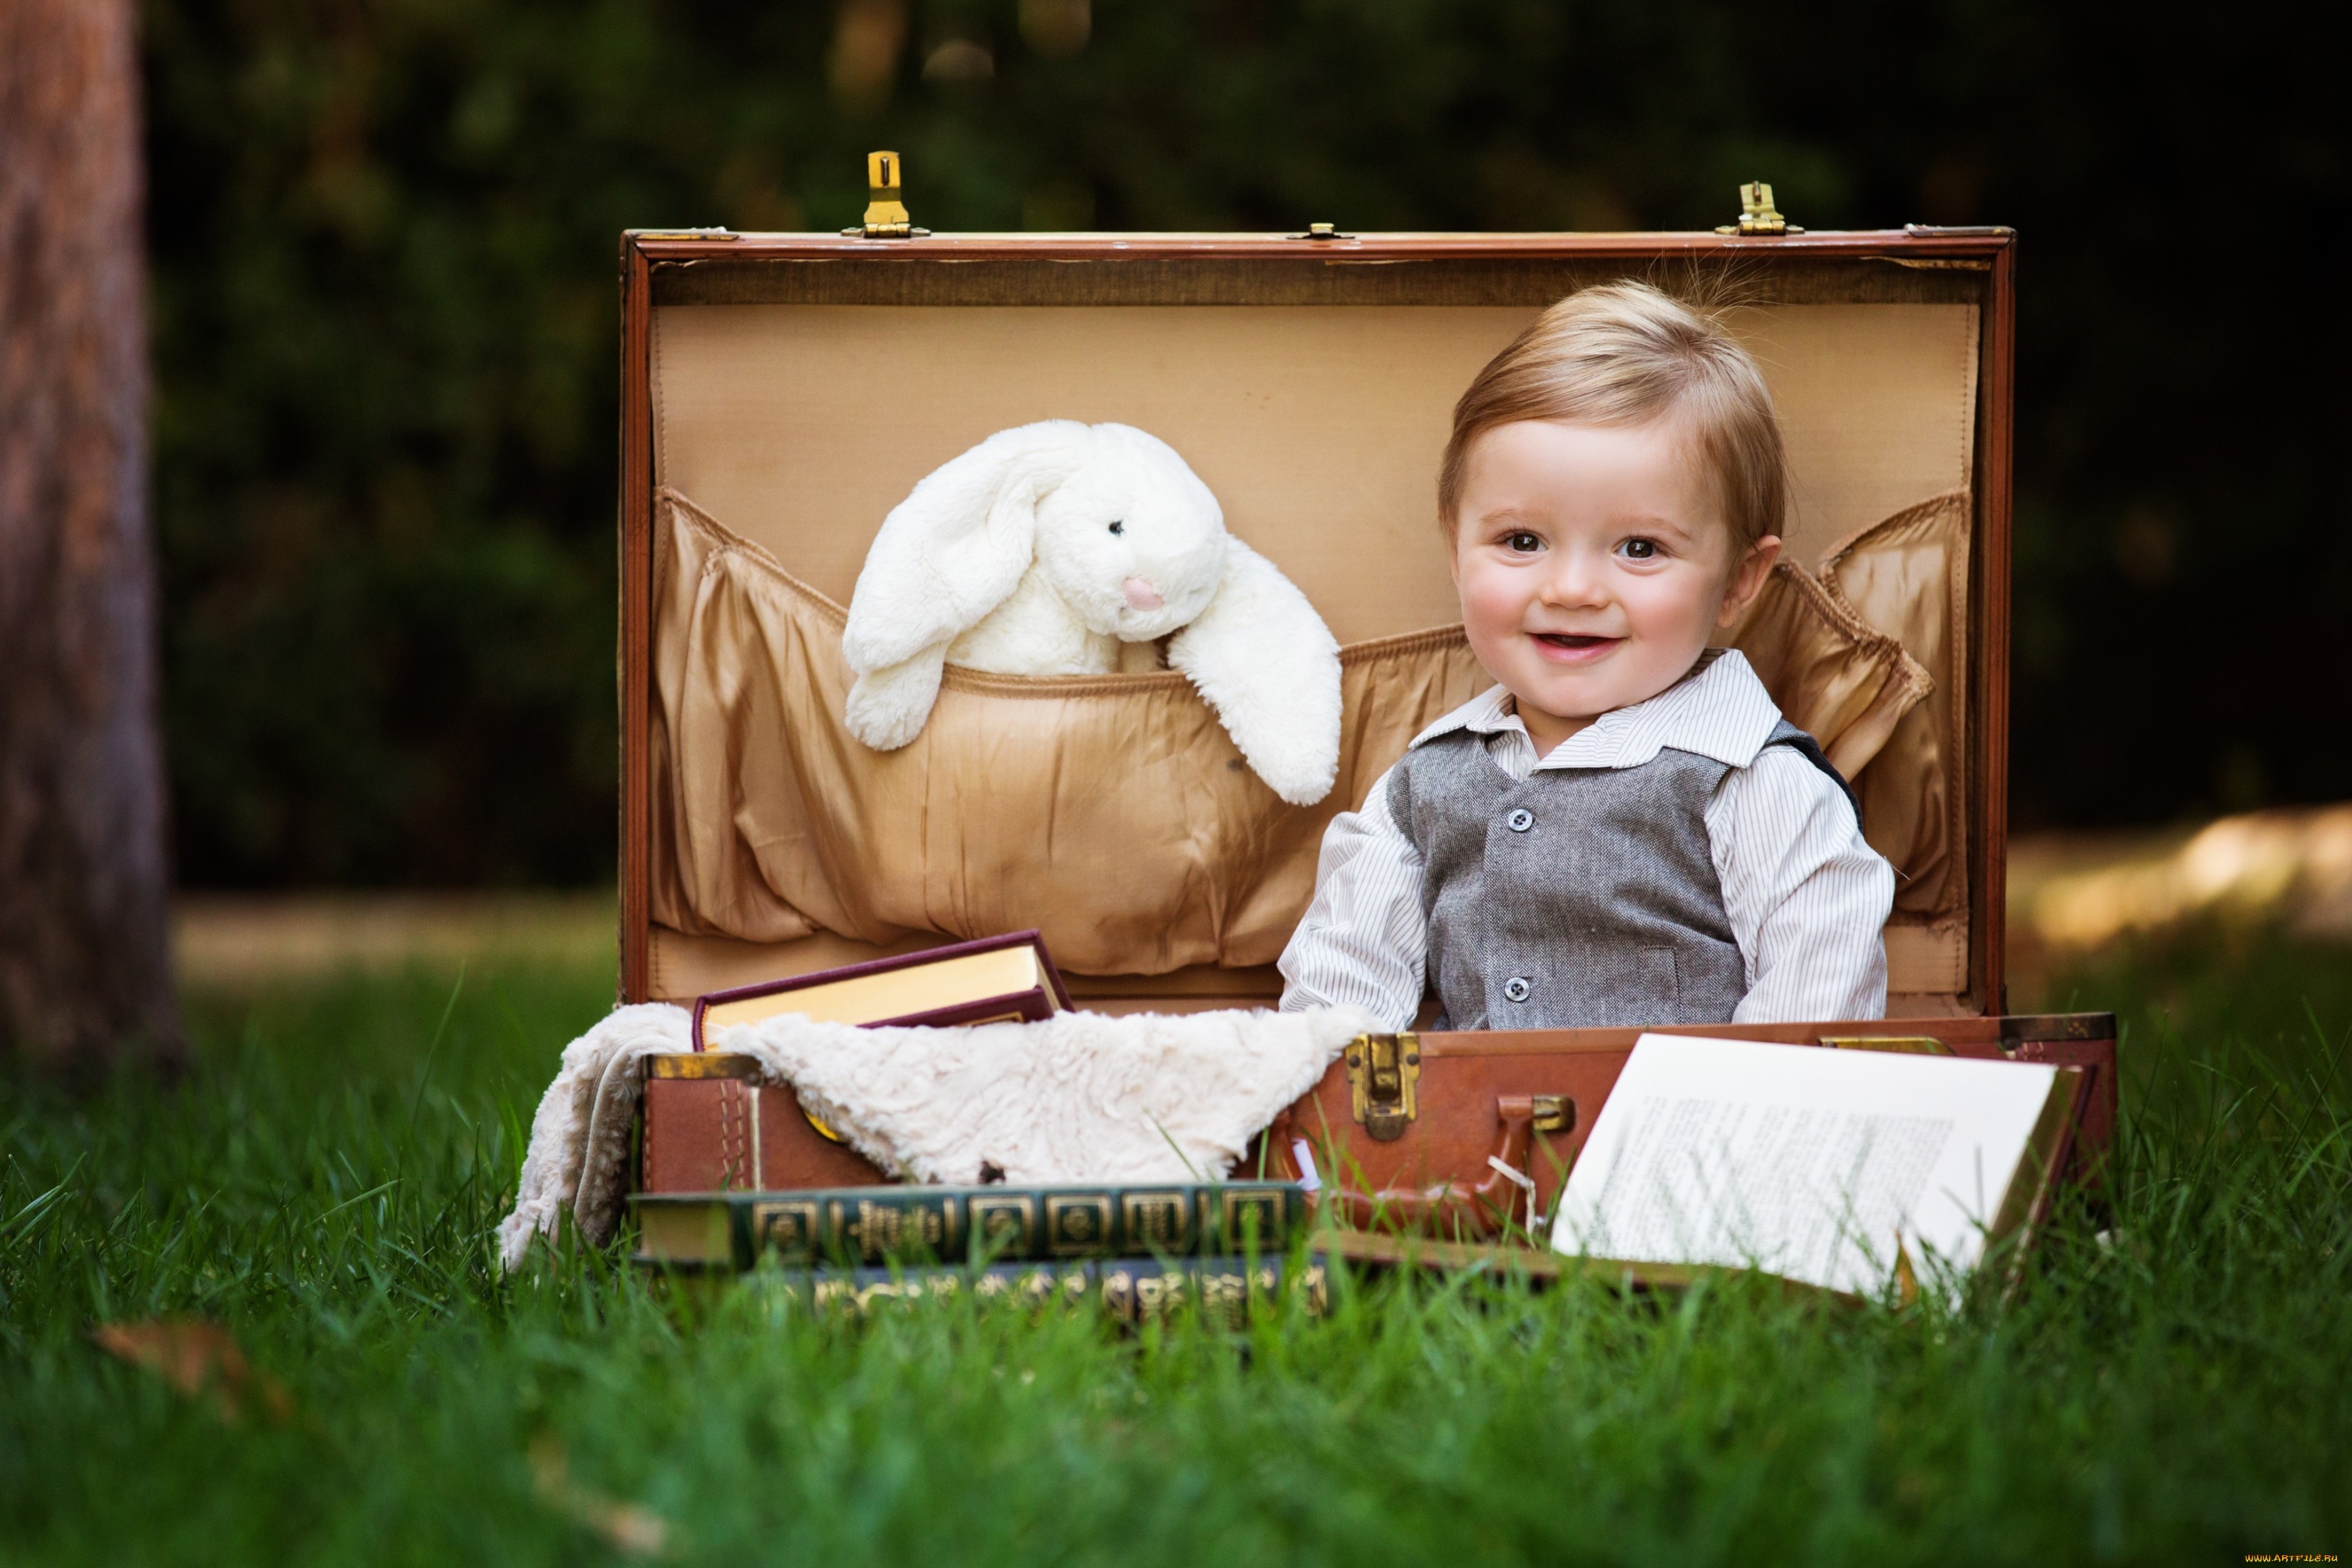 photography, child, grass, little boy, stuffed animal, suitcase